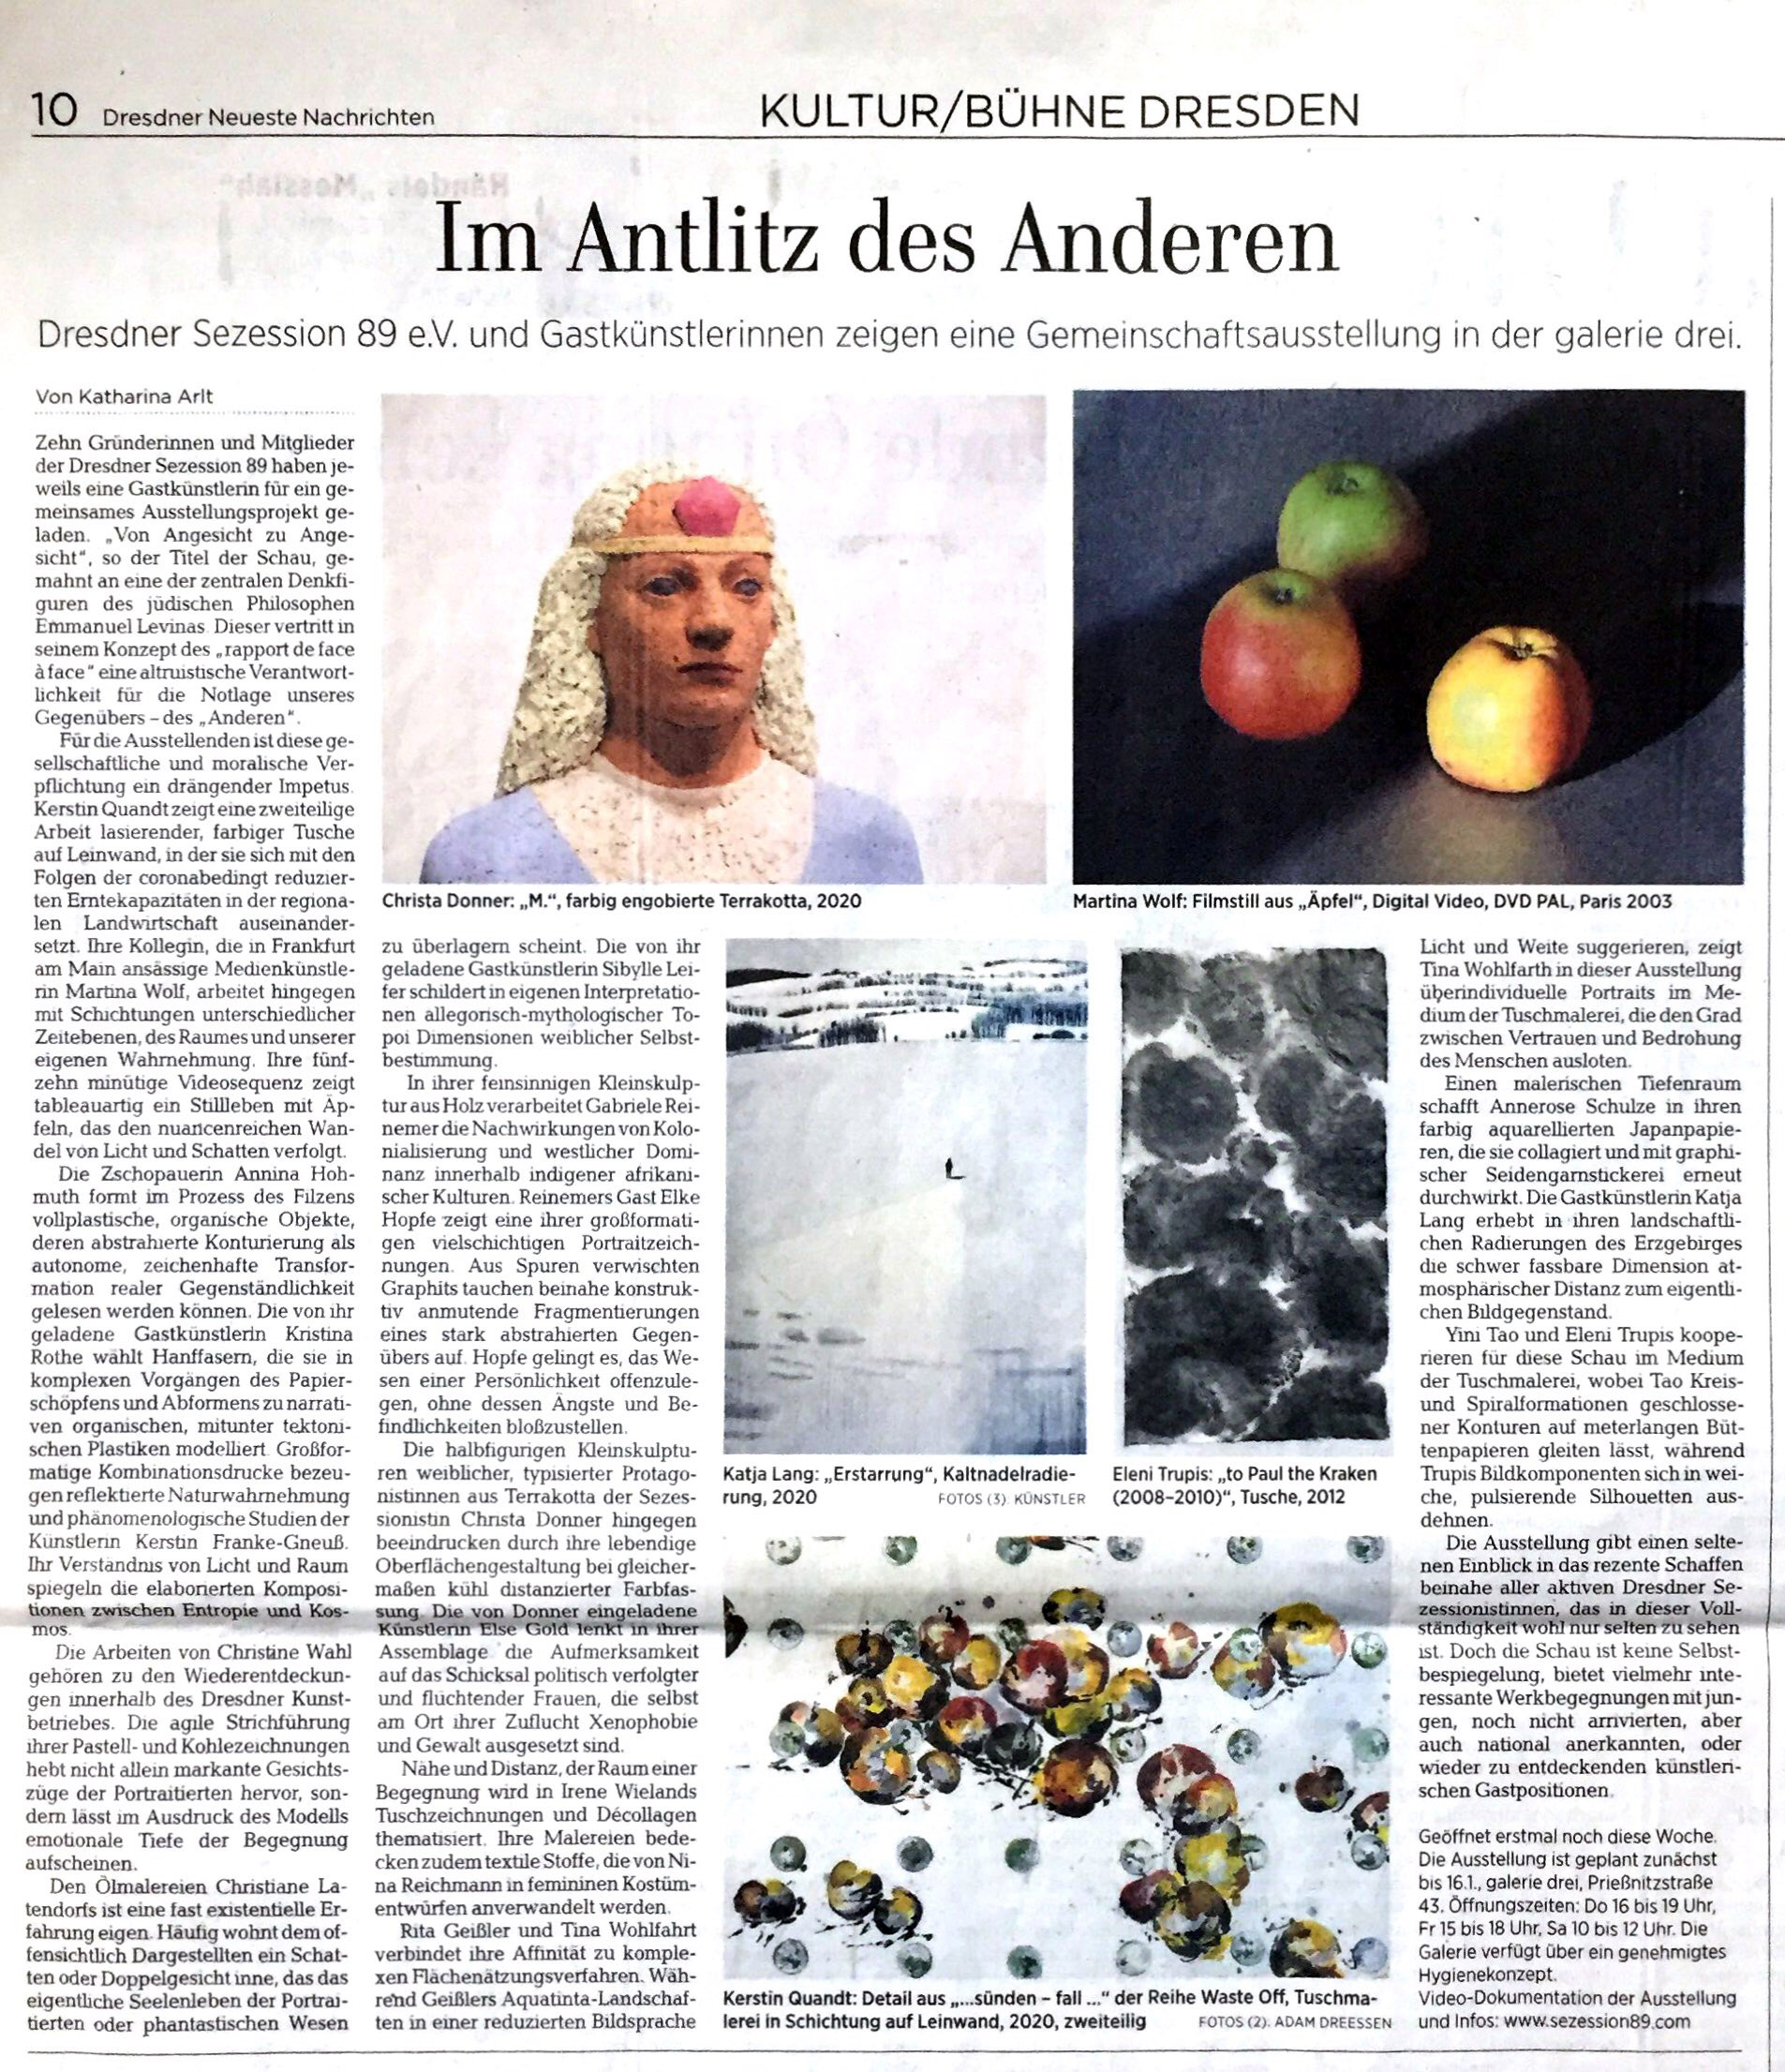 Dresdner Neueste Nachrichten, 17.12.2020, Katharina Arlt